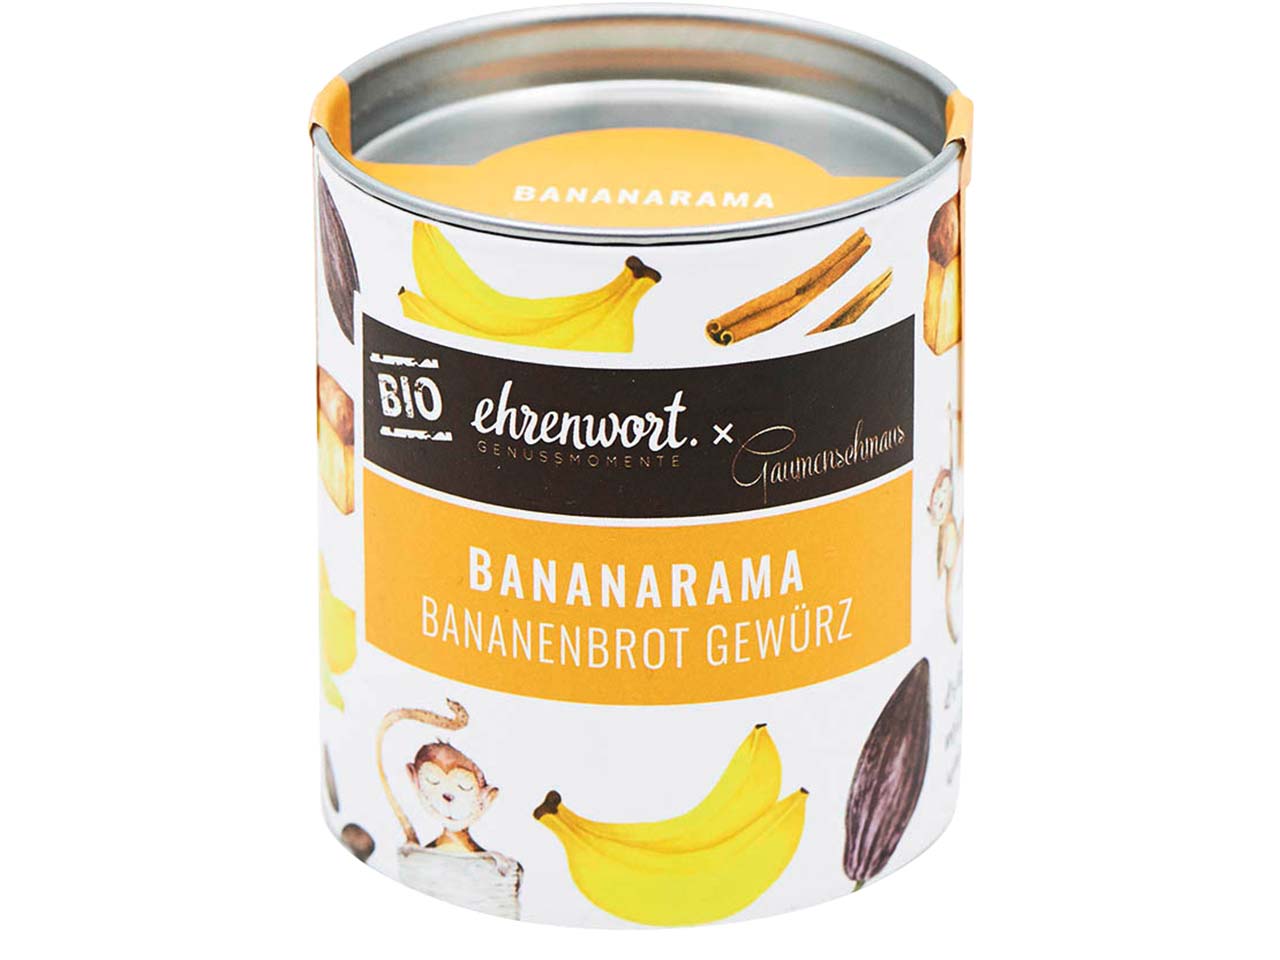 ehrenwort Bananenbrot Gewürz „Bananarama“ - öko, fair einkaufen